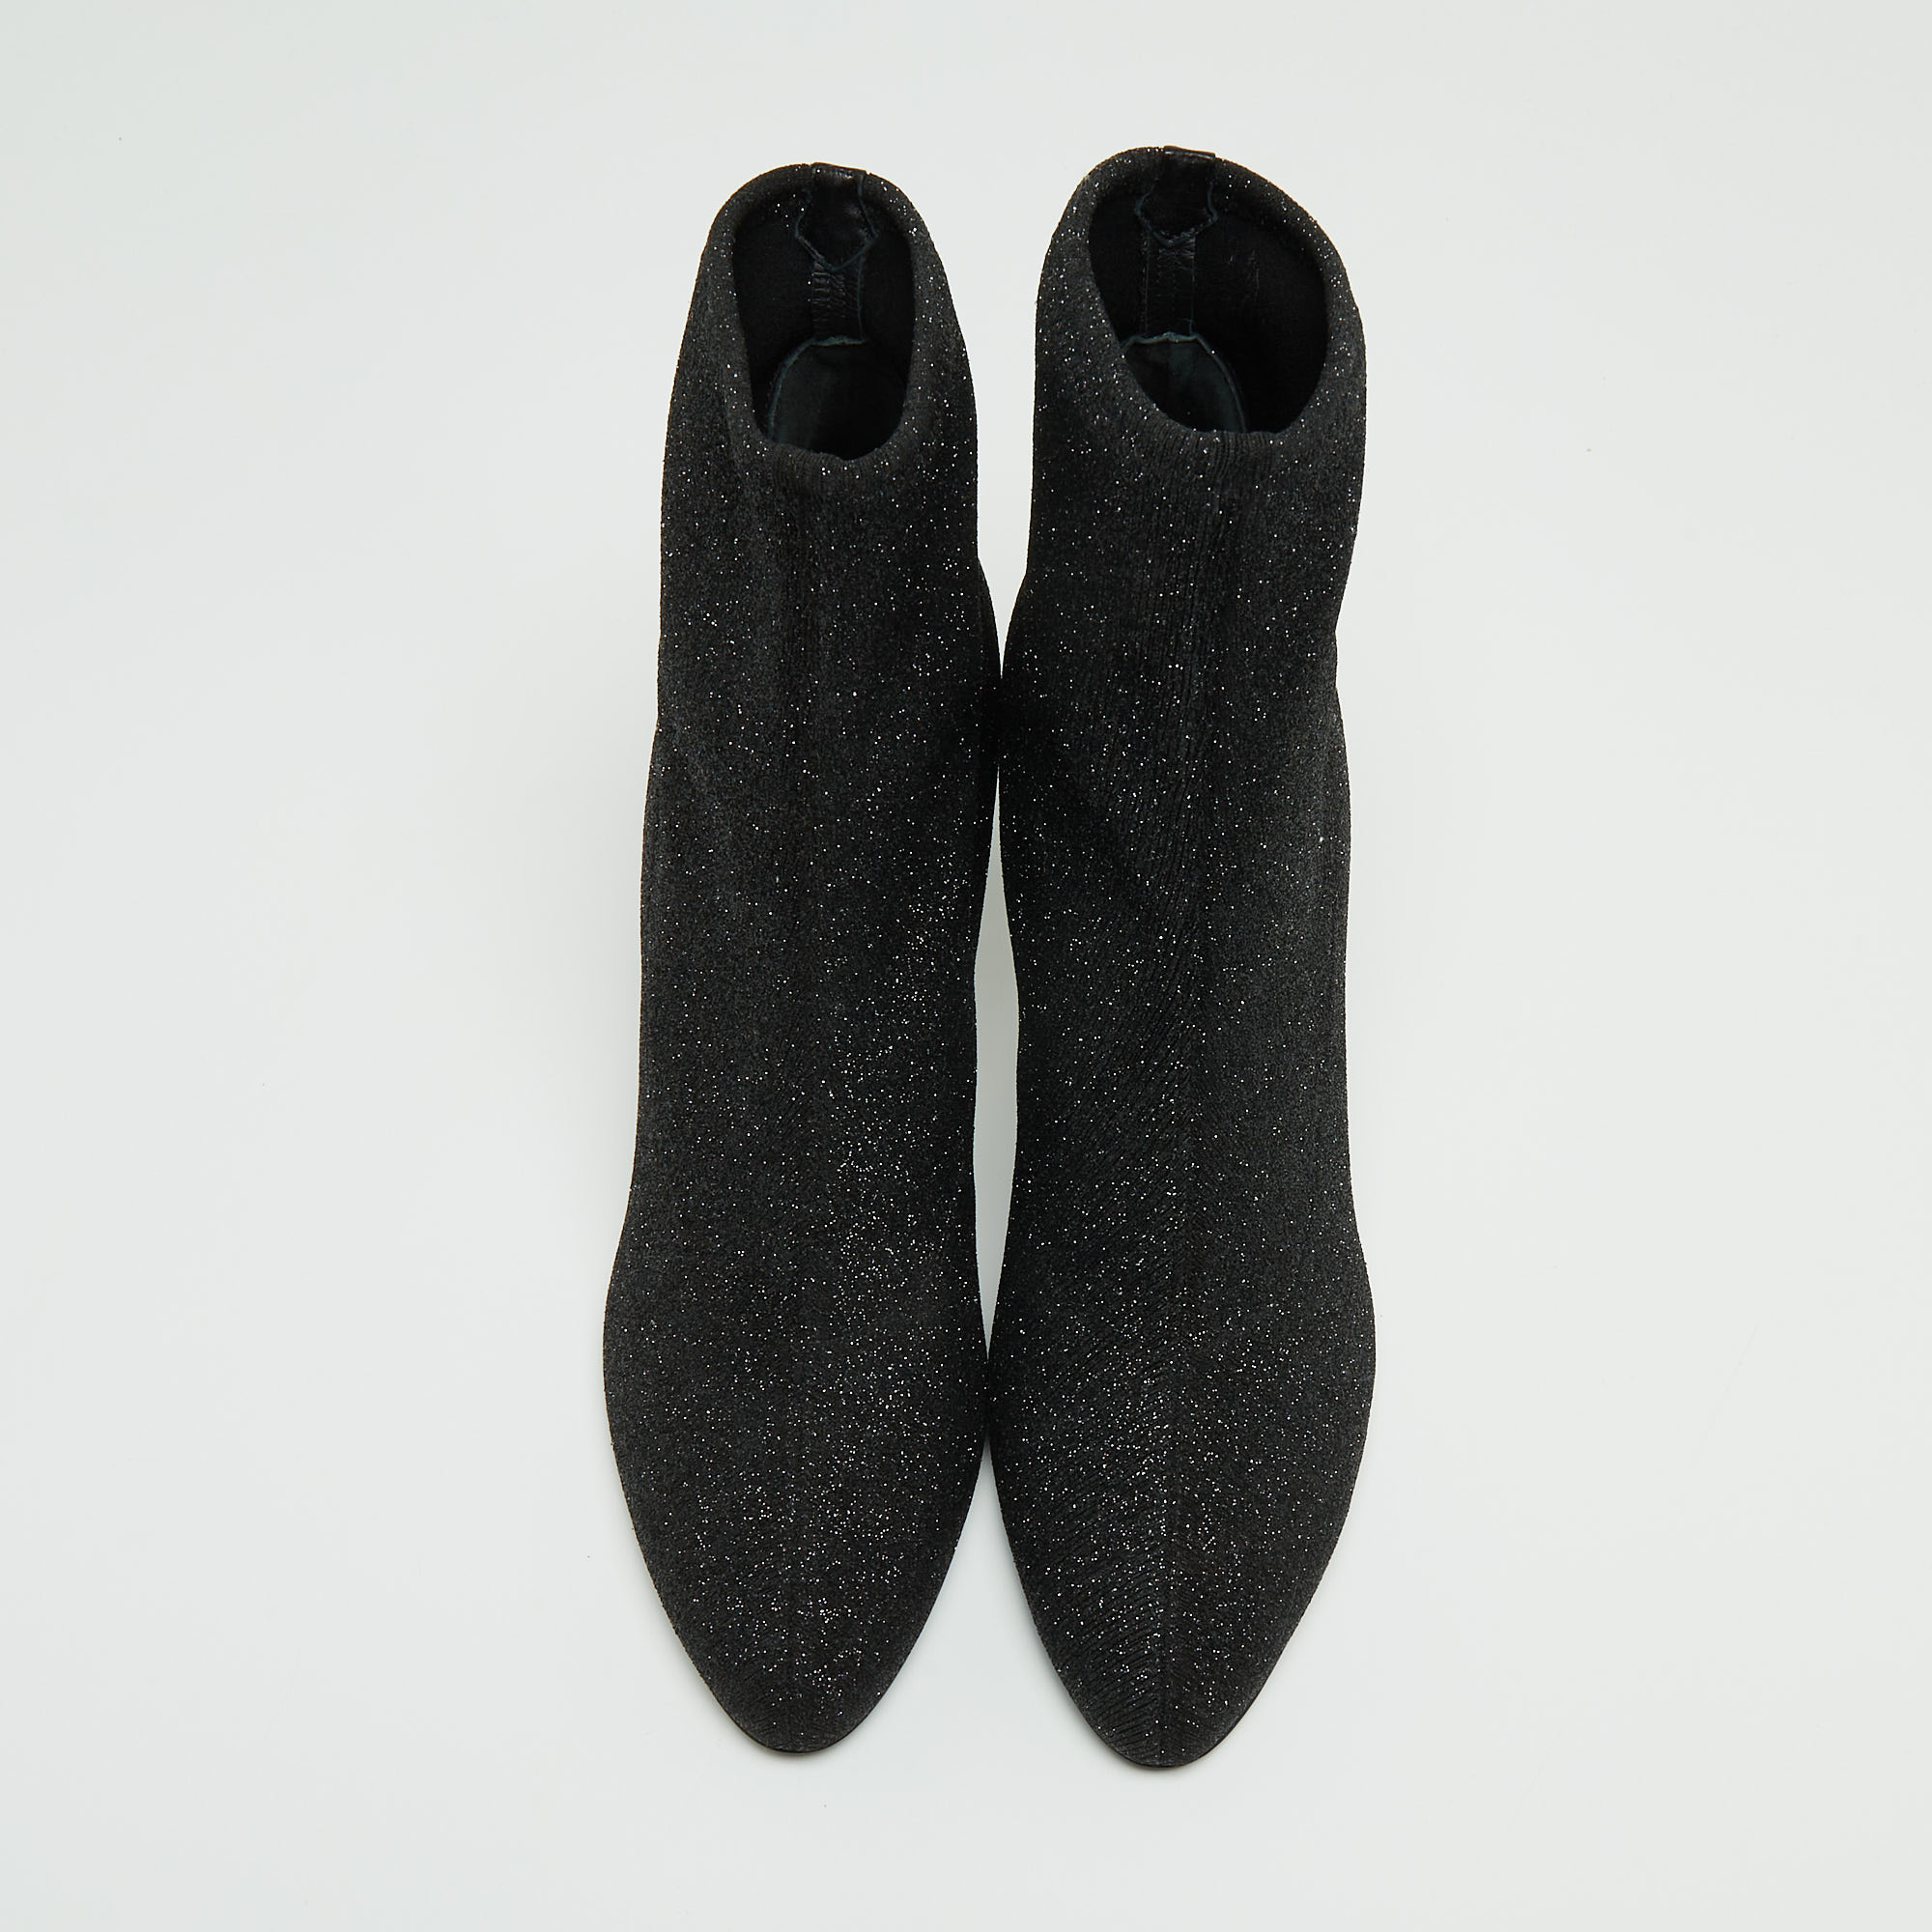 Giuseppe Zanotti Black Glitter Fabric Ankle Boots Size 41